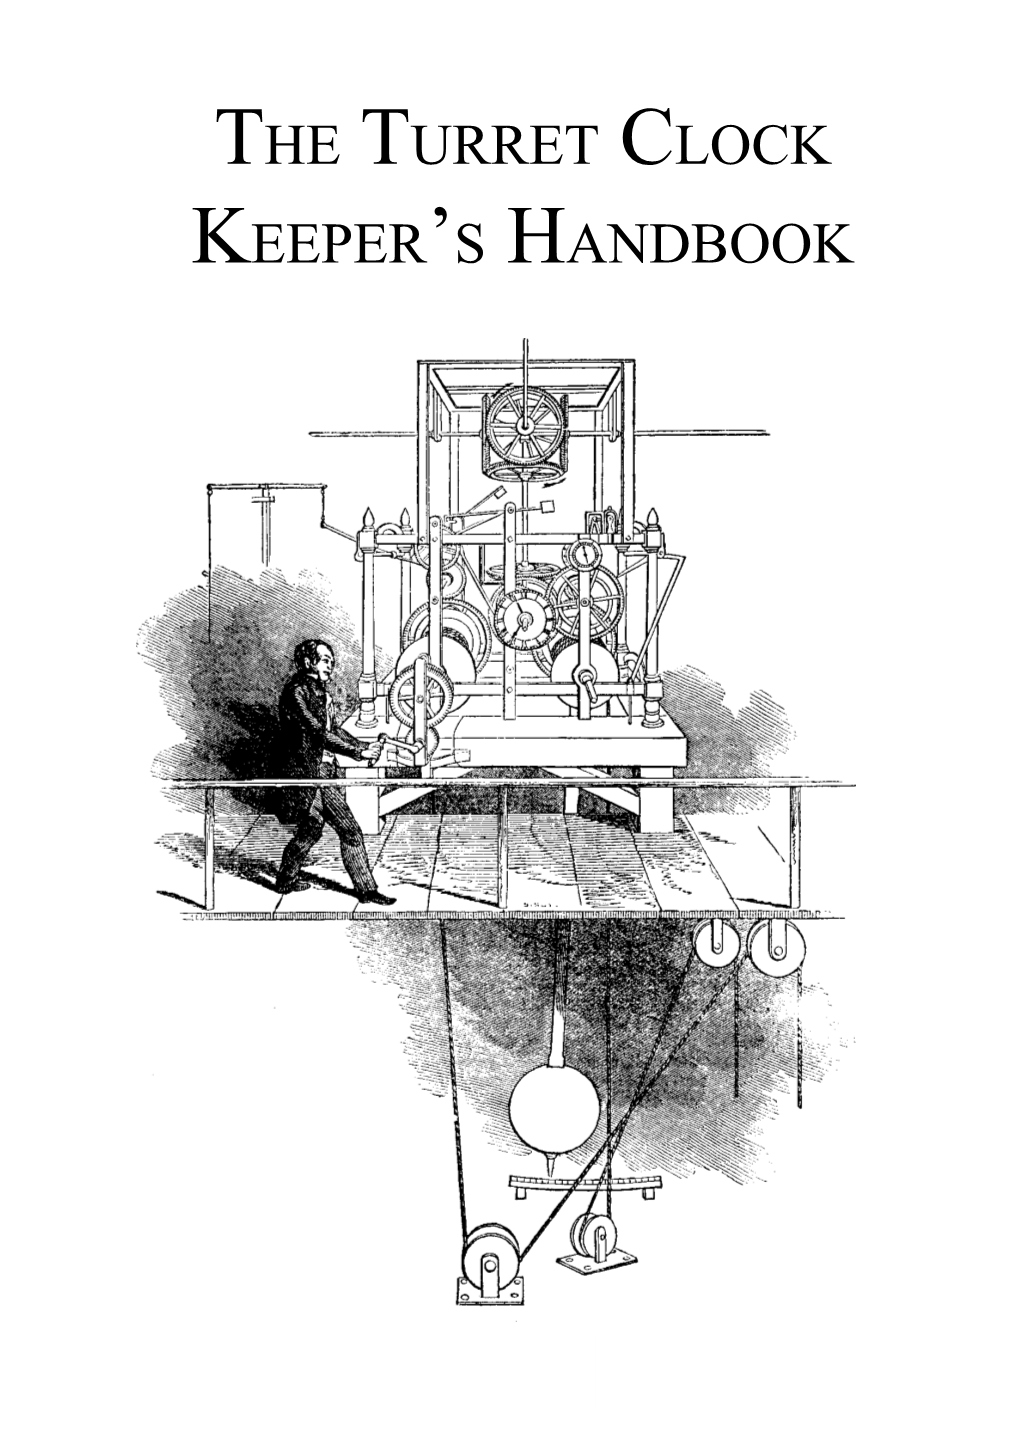 The Turret Clock Keeper's Handbook